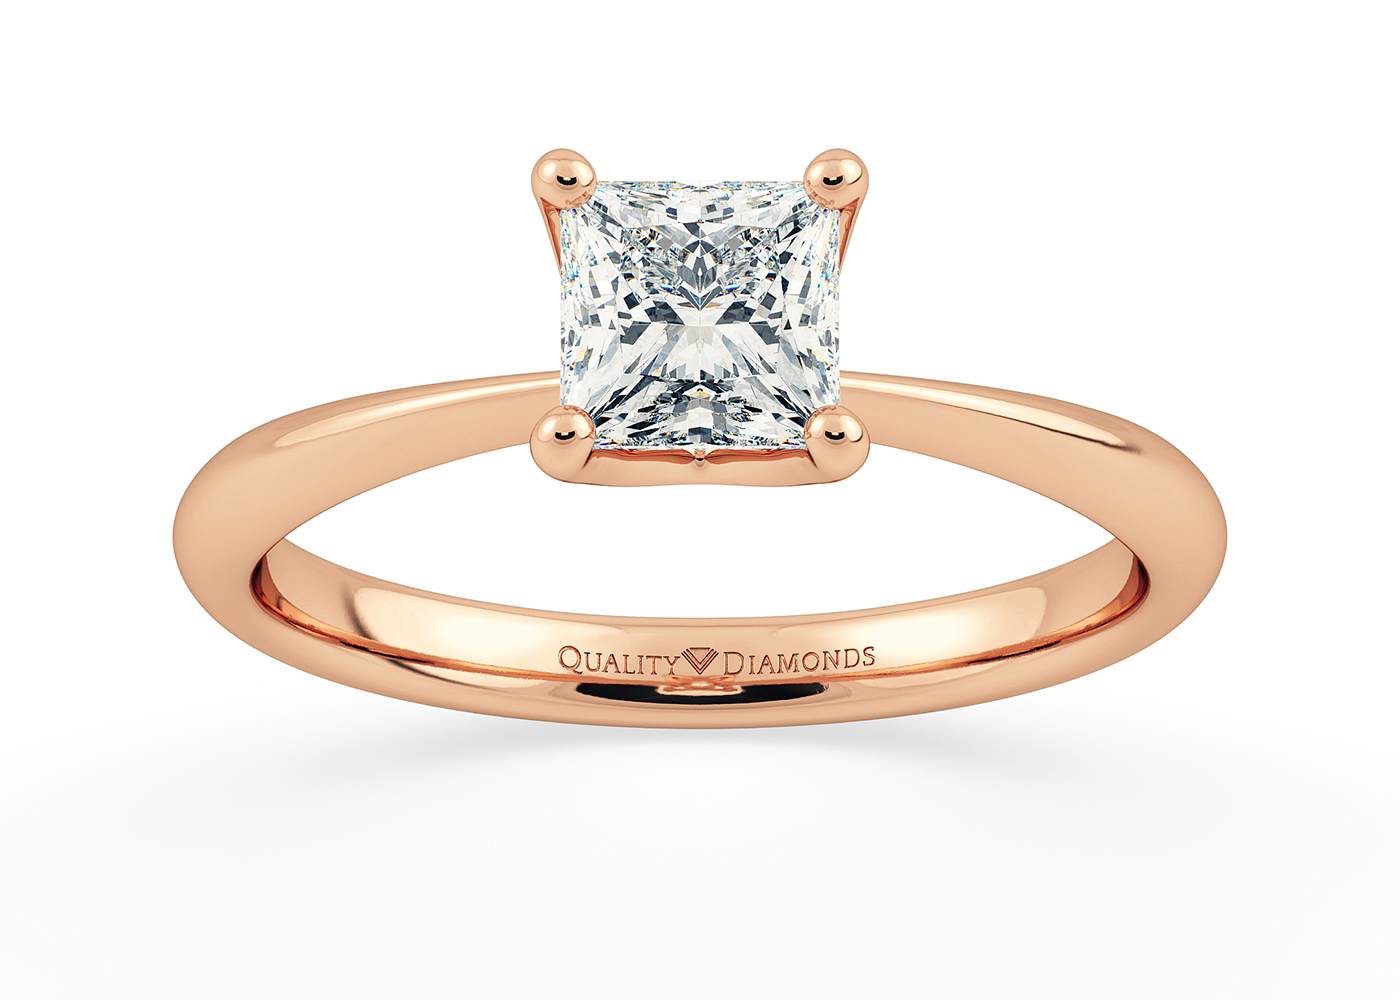 Half Carat Princess Solitaire Diamond Engagement Ring in 18K Rose Gold